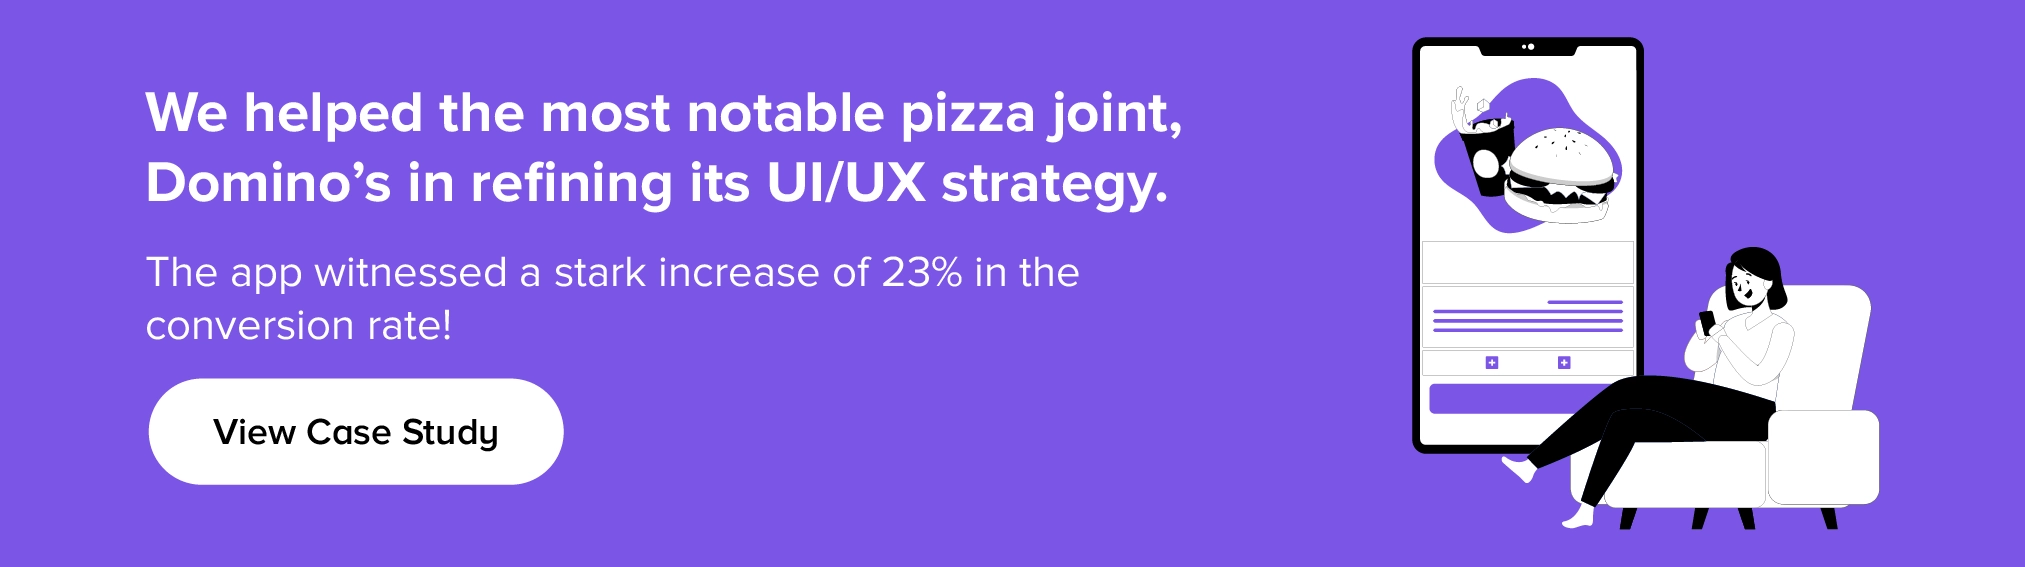 Domino's と協力して UI/UX 戦略を洗練させた方法。